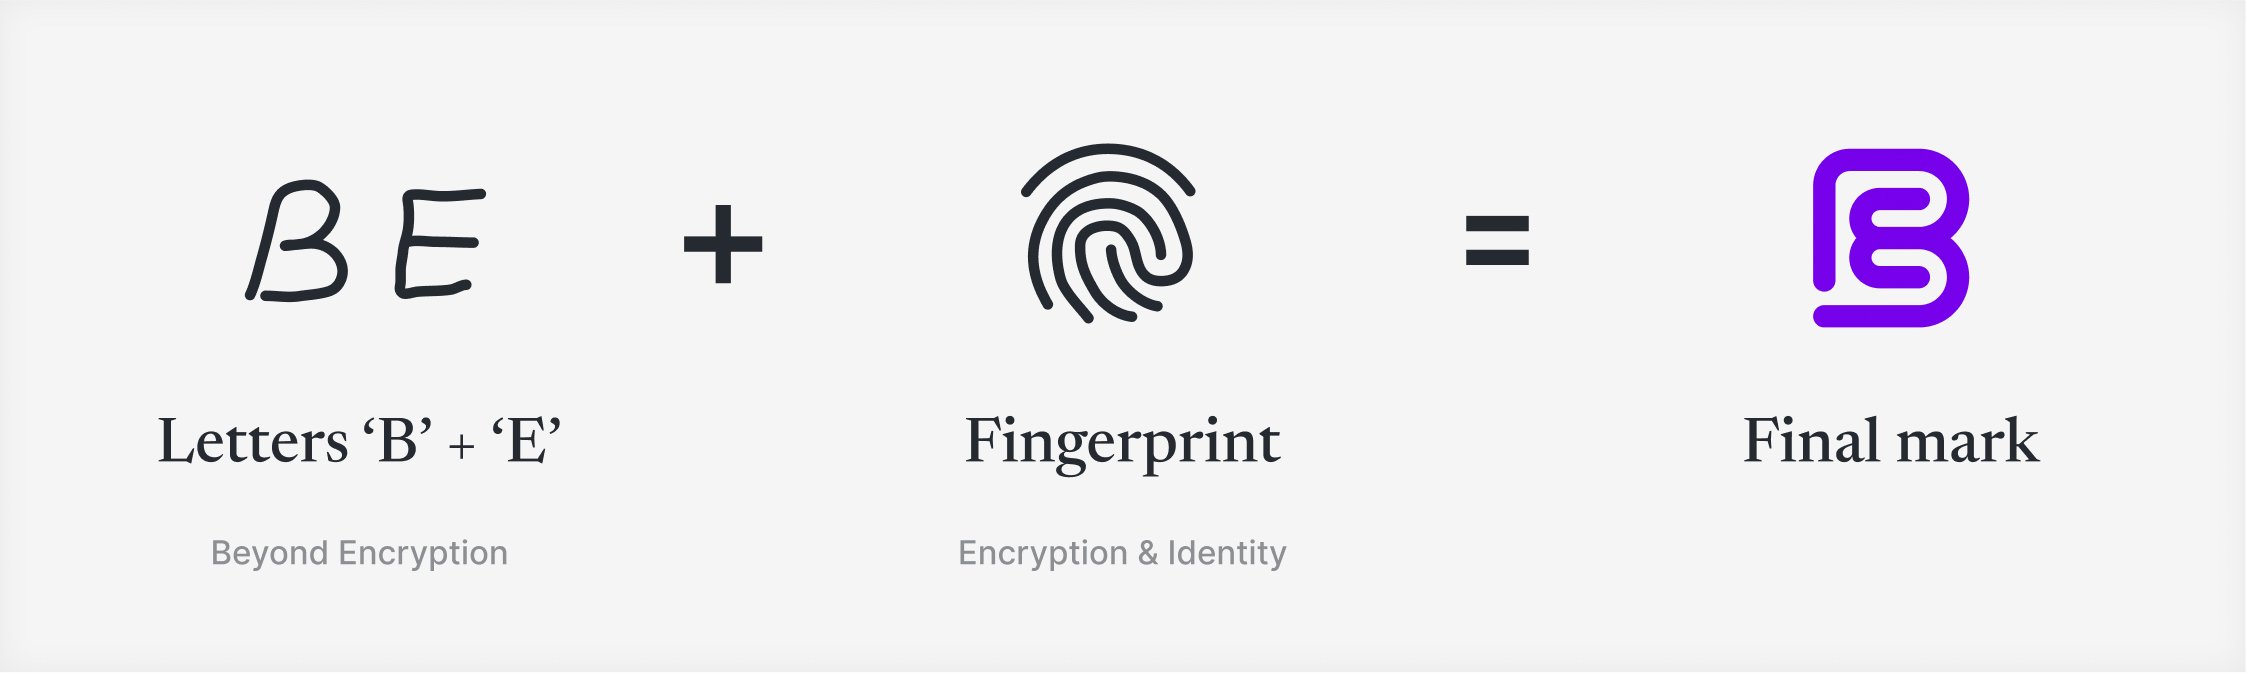 Beyond Encryption logo components